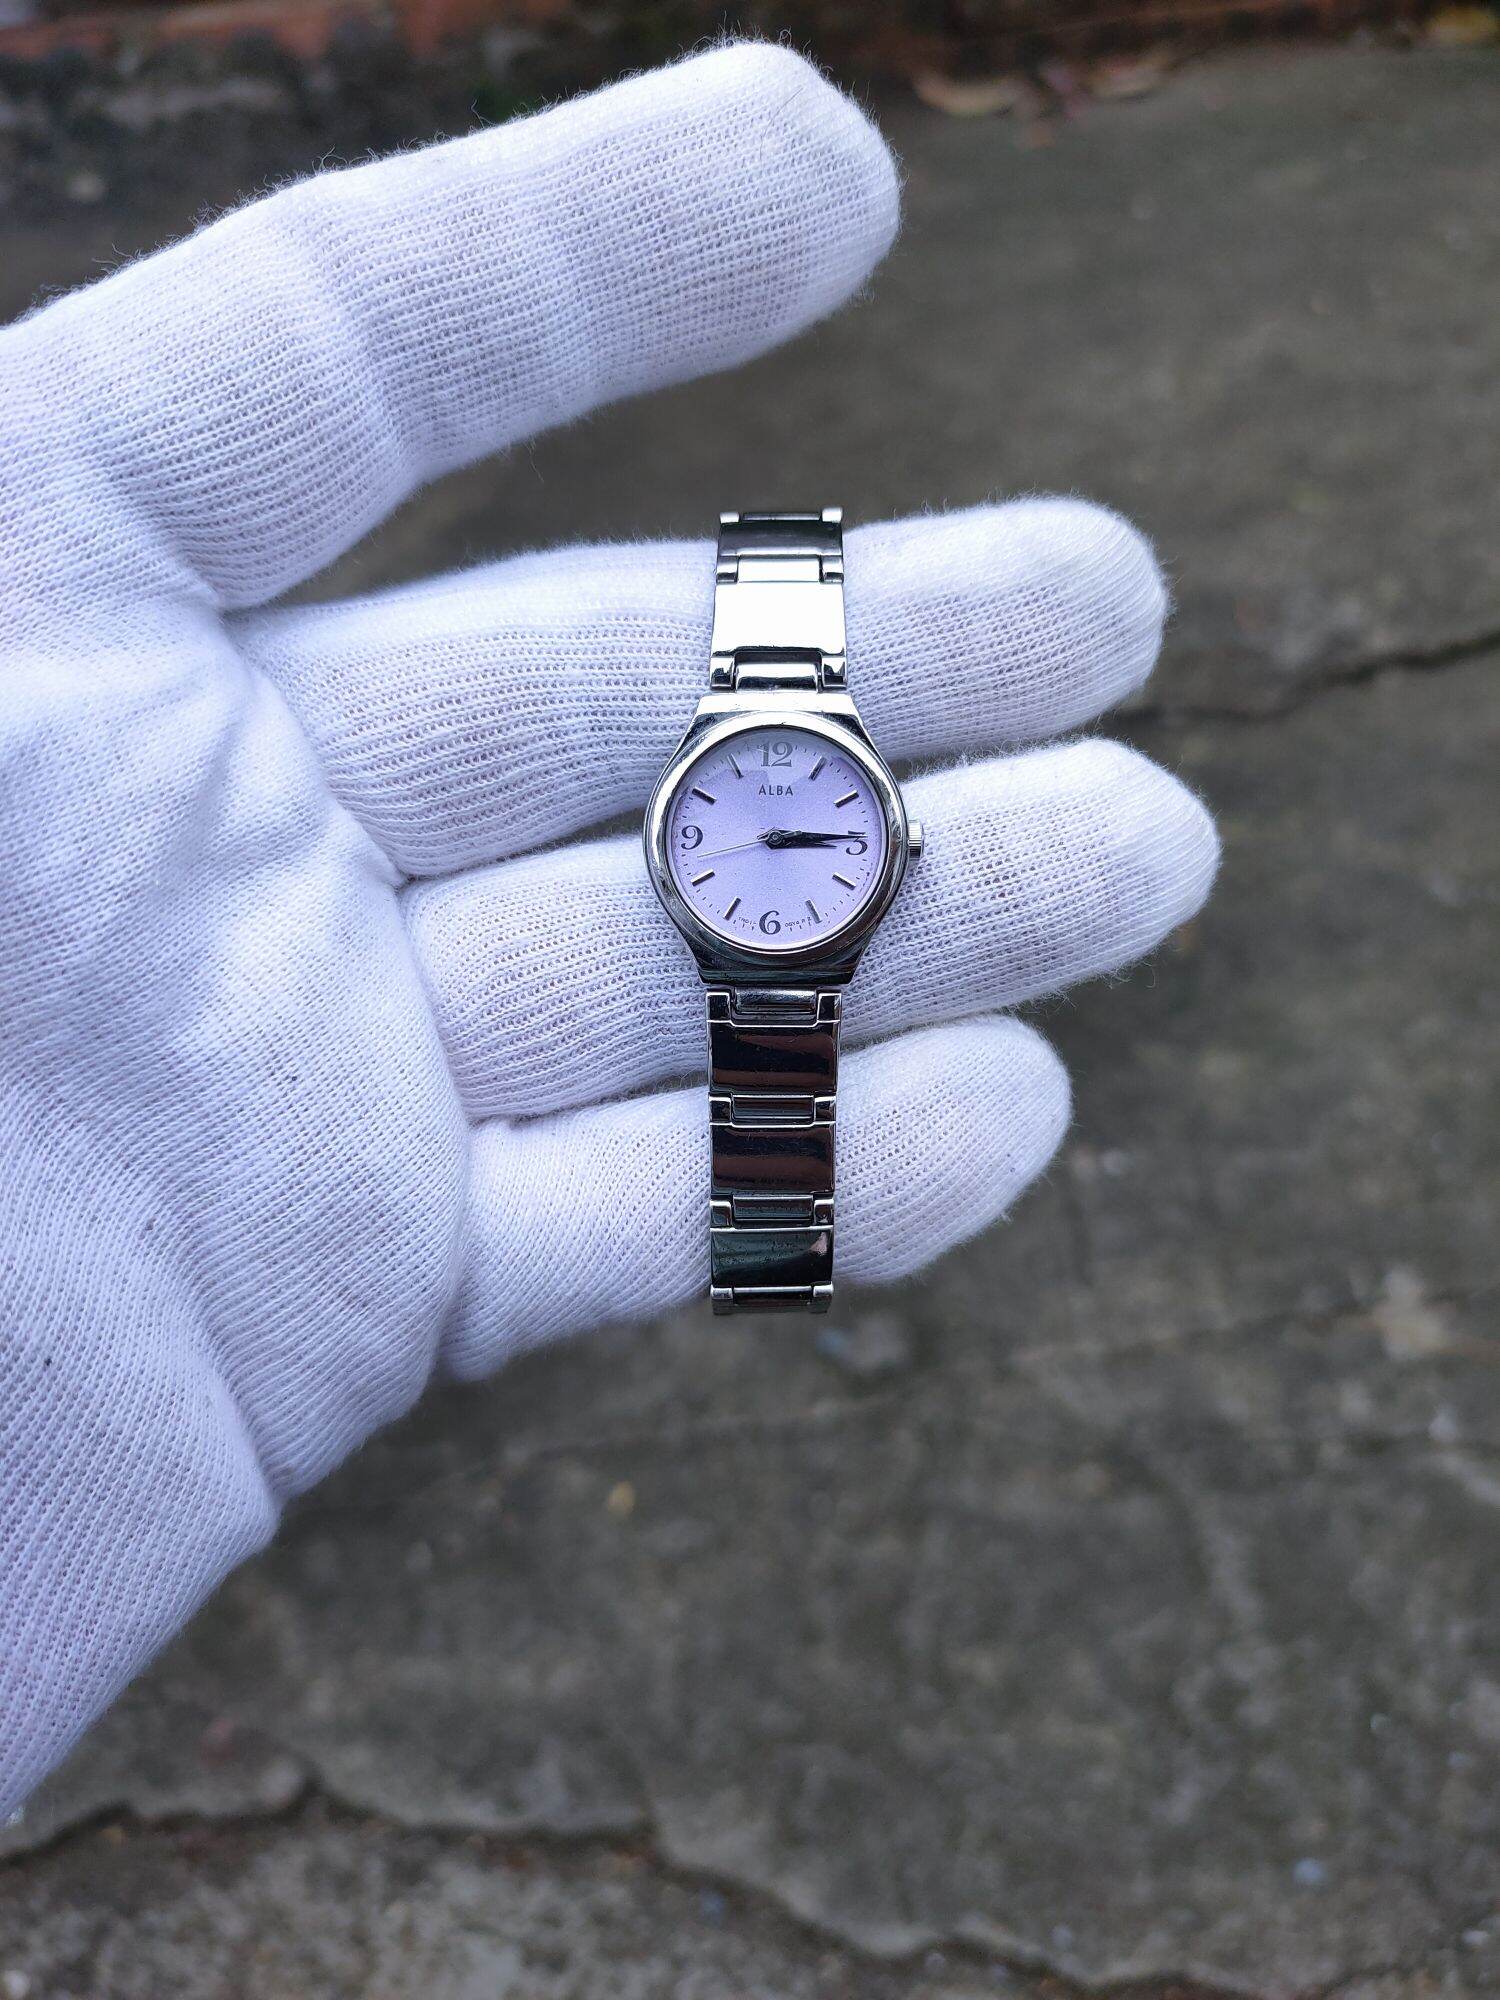 Đồng hồ nữ Alba seiko, mặt tím mộng mơ, mặt tròn size 22mm